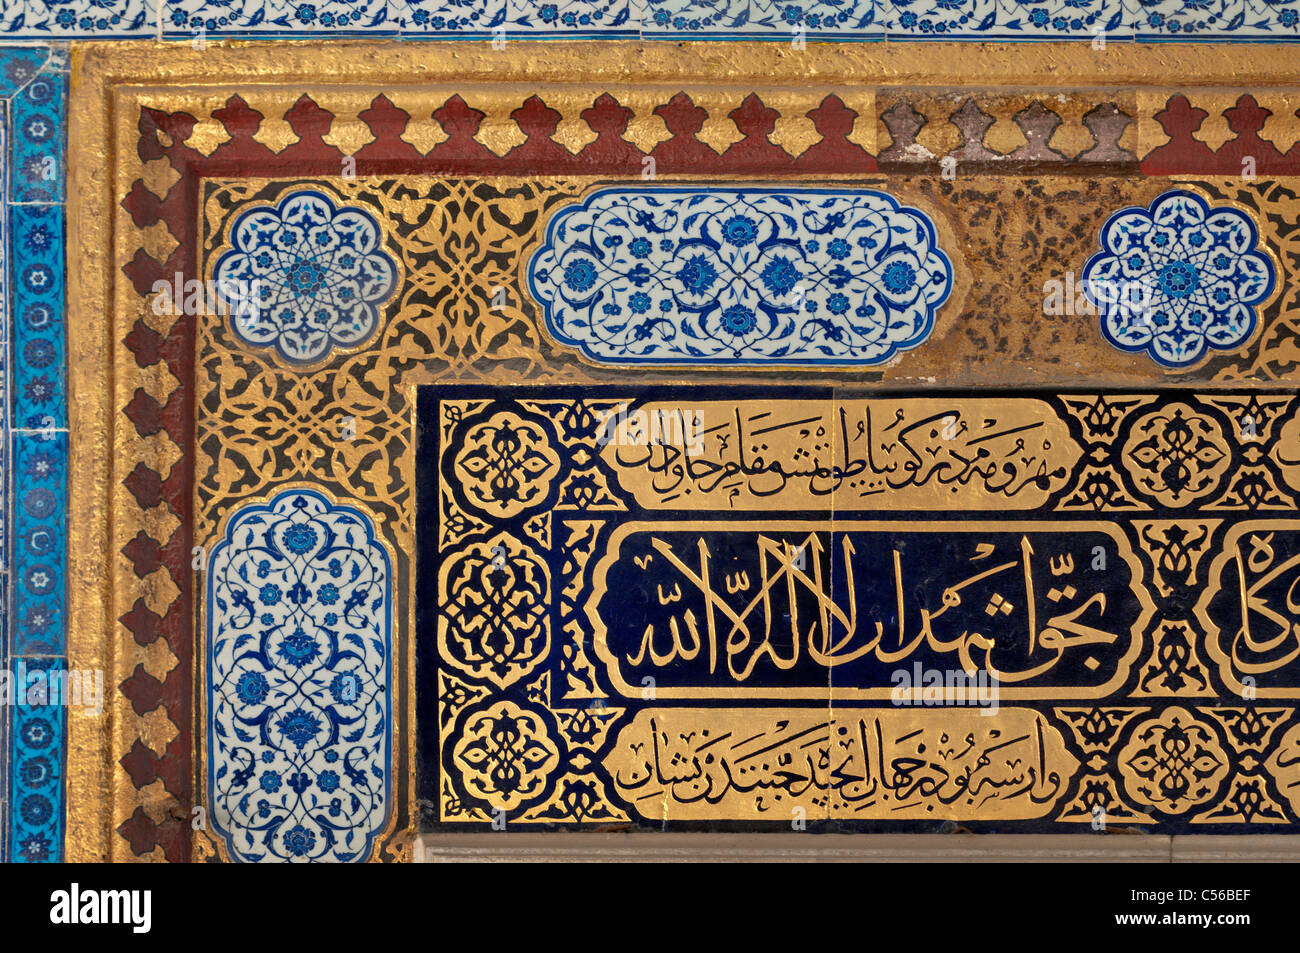 Iznik Tiles and calligraphy above door to Circumcision Room, Topkapi Palace, Istanbul, Turkey Stock Photo